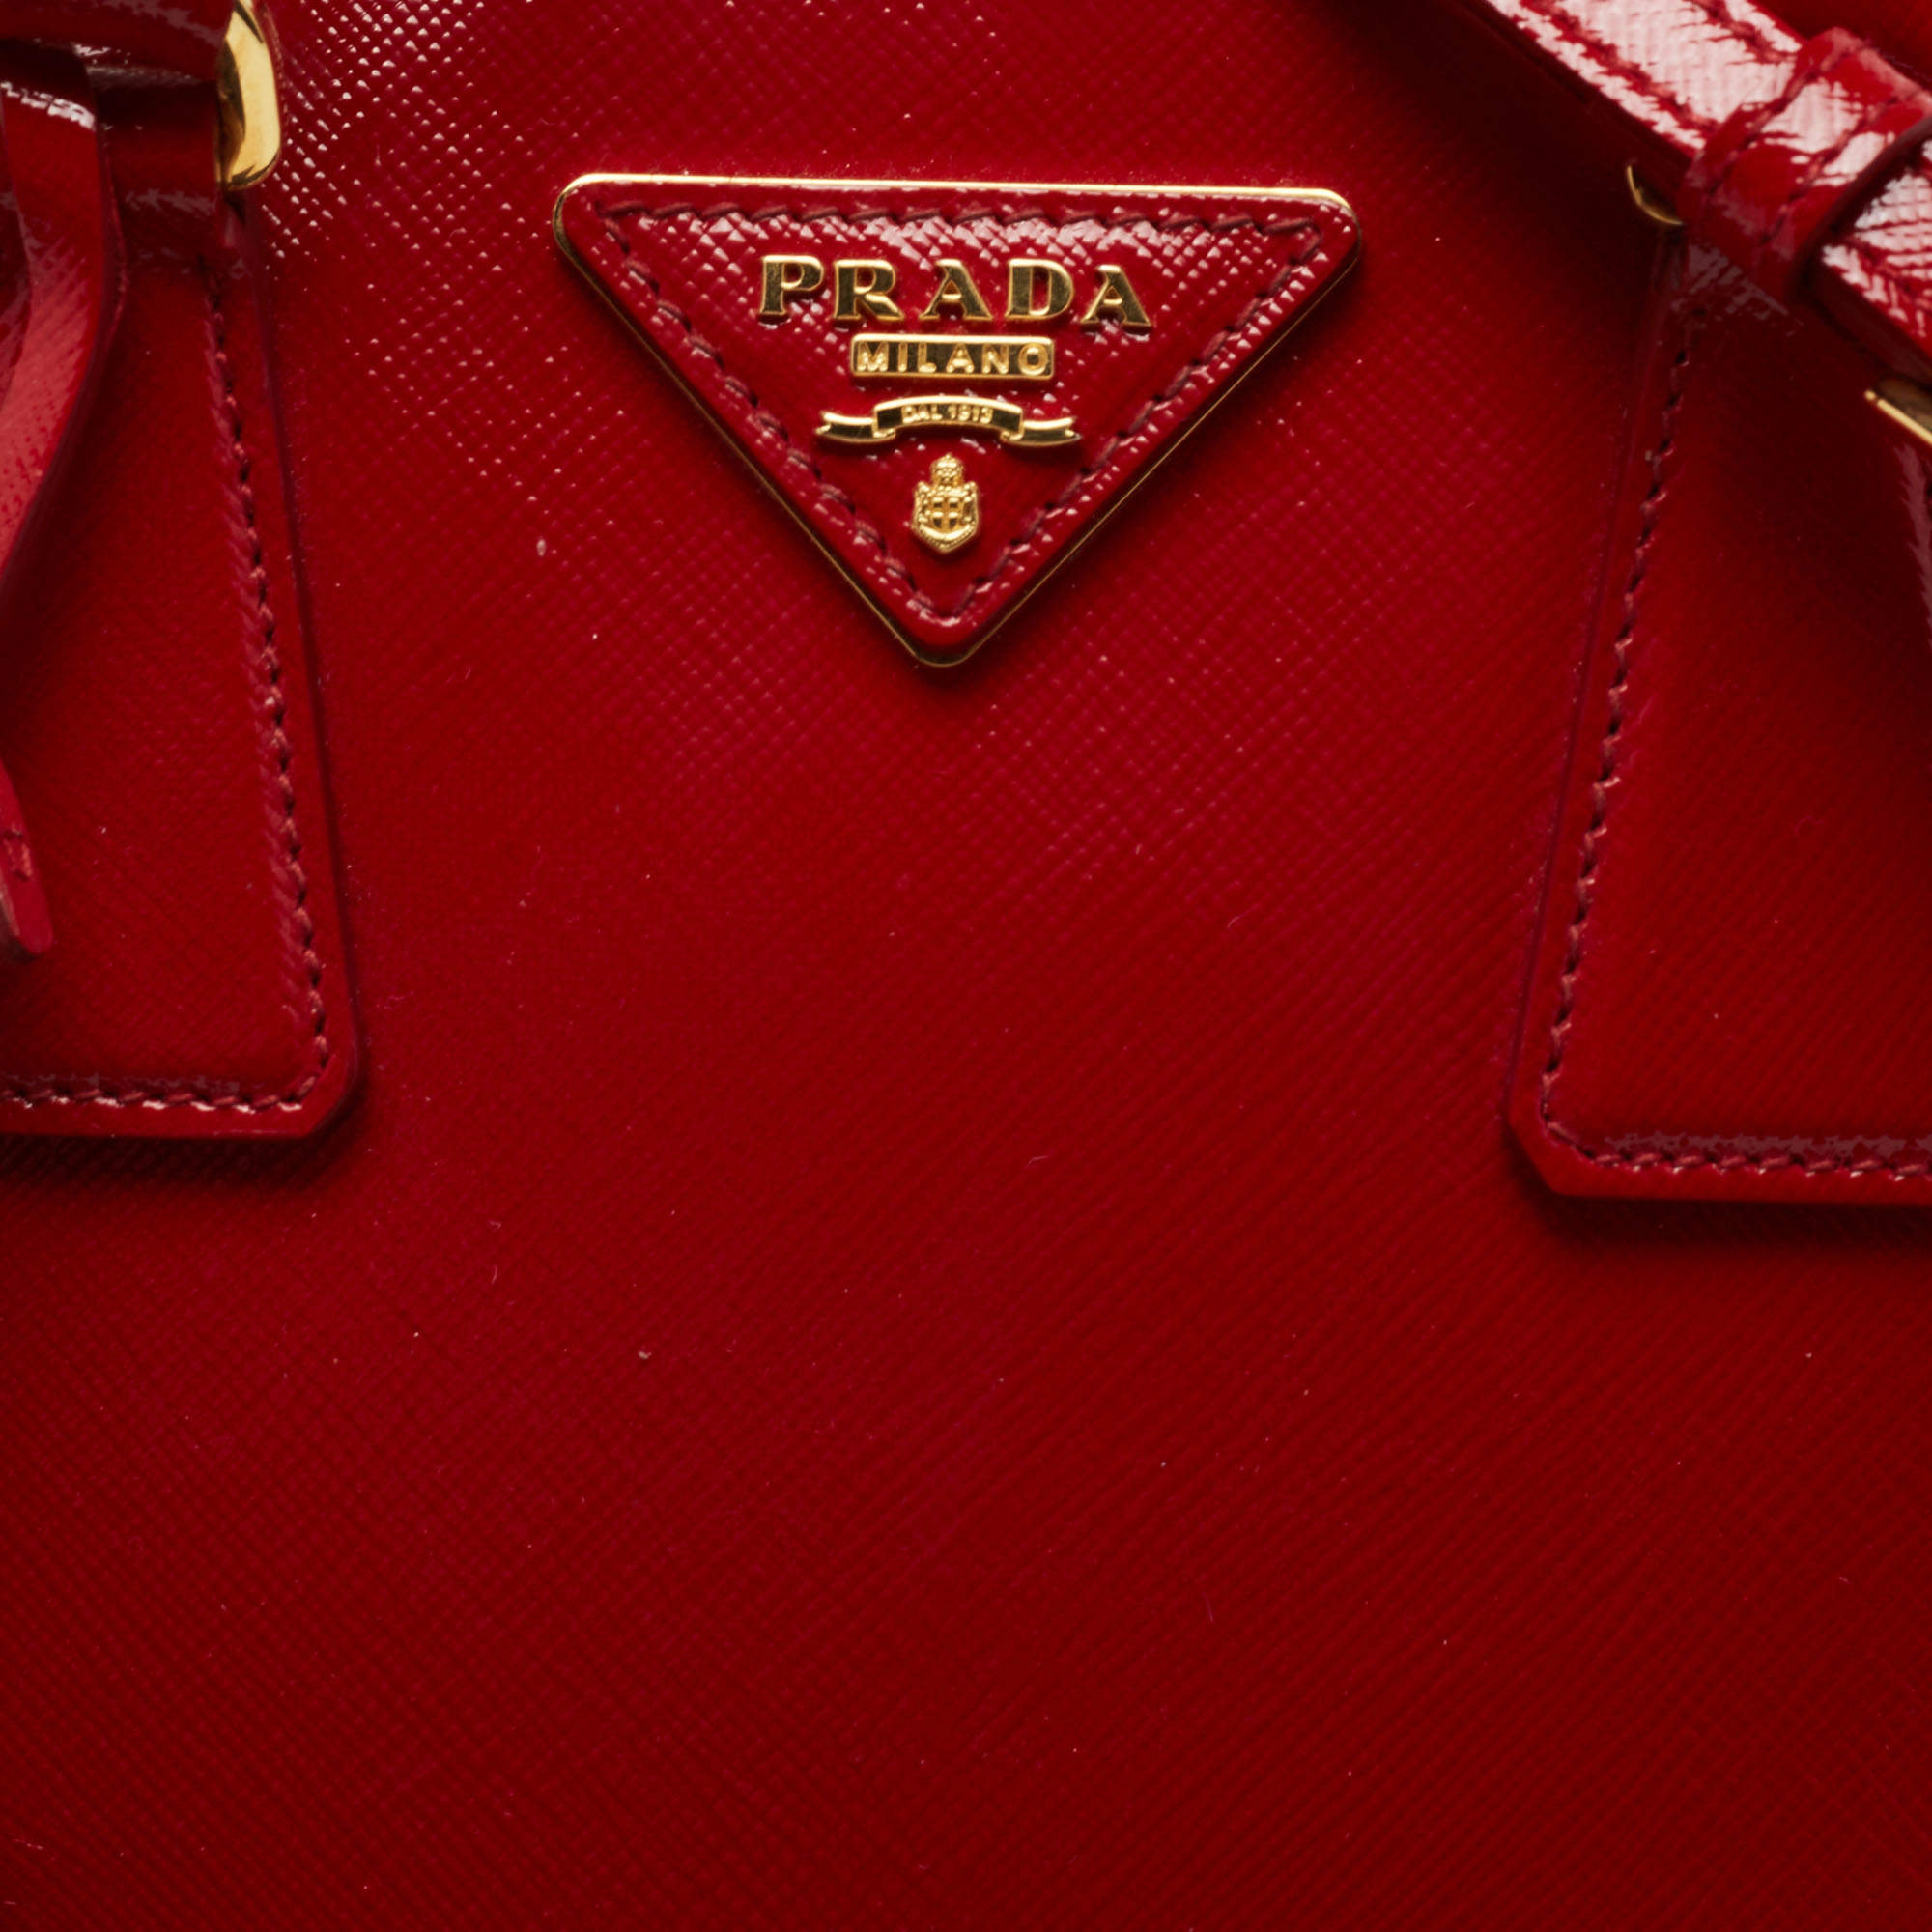 Prada Promenade Bag Vernice Saffiano Leather Medium Red 64445640